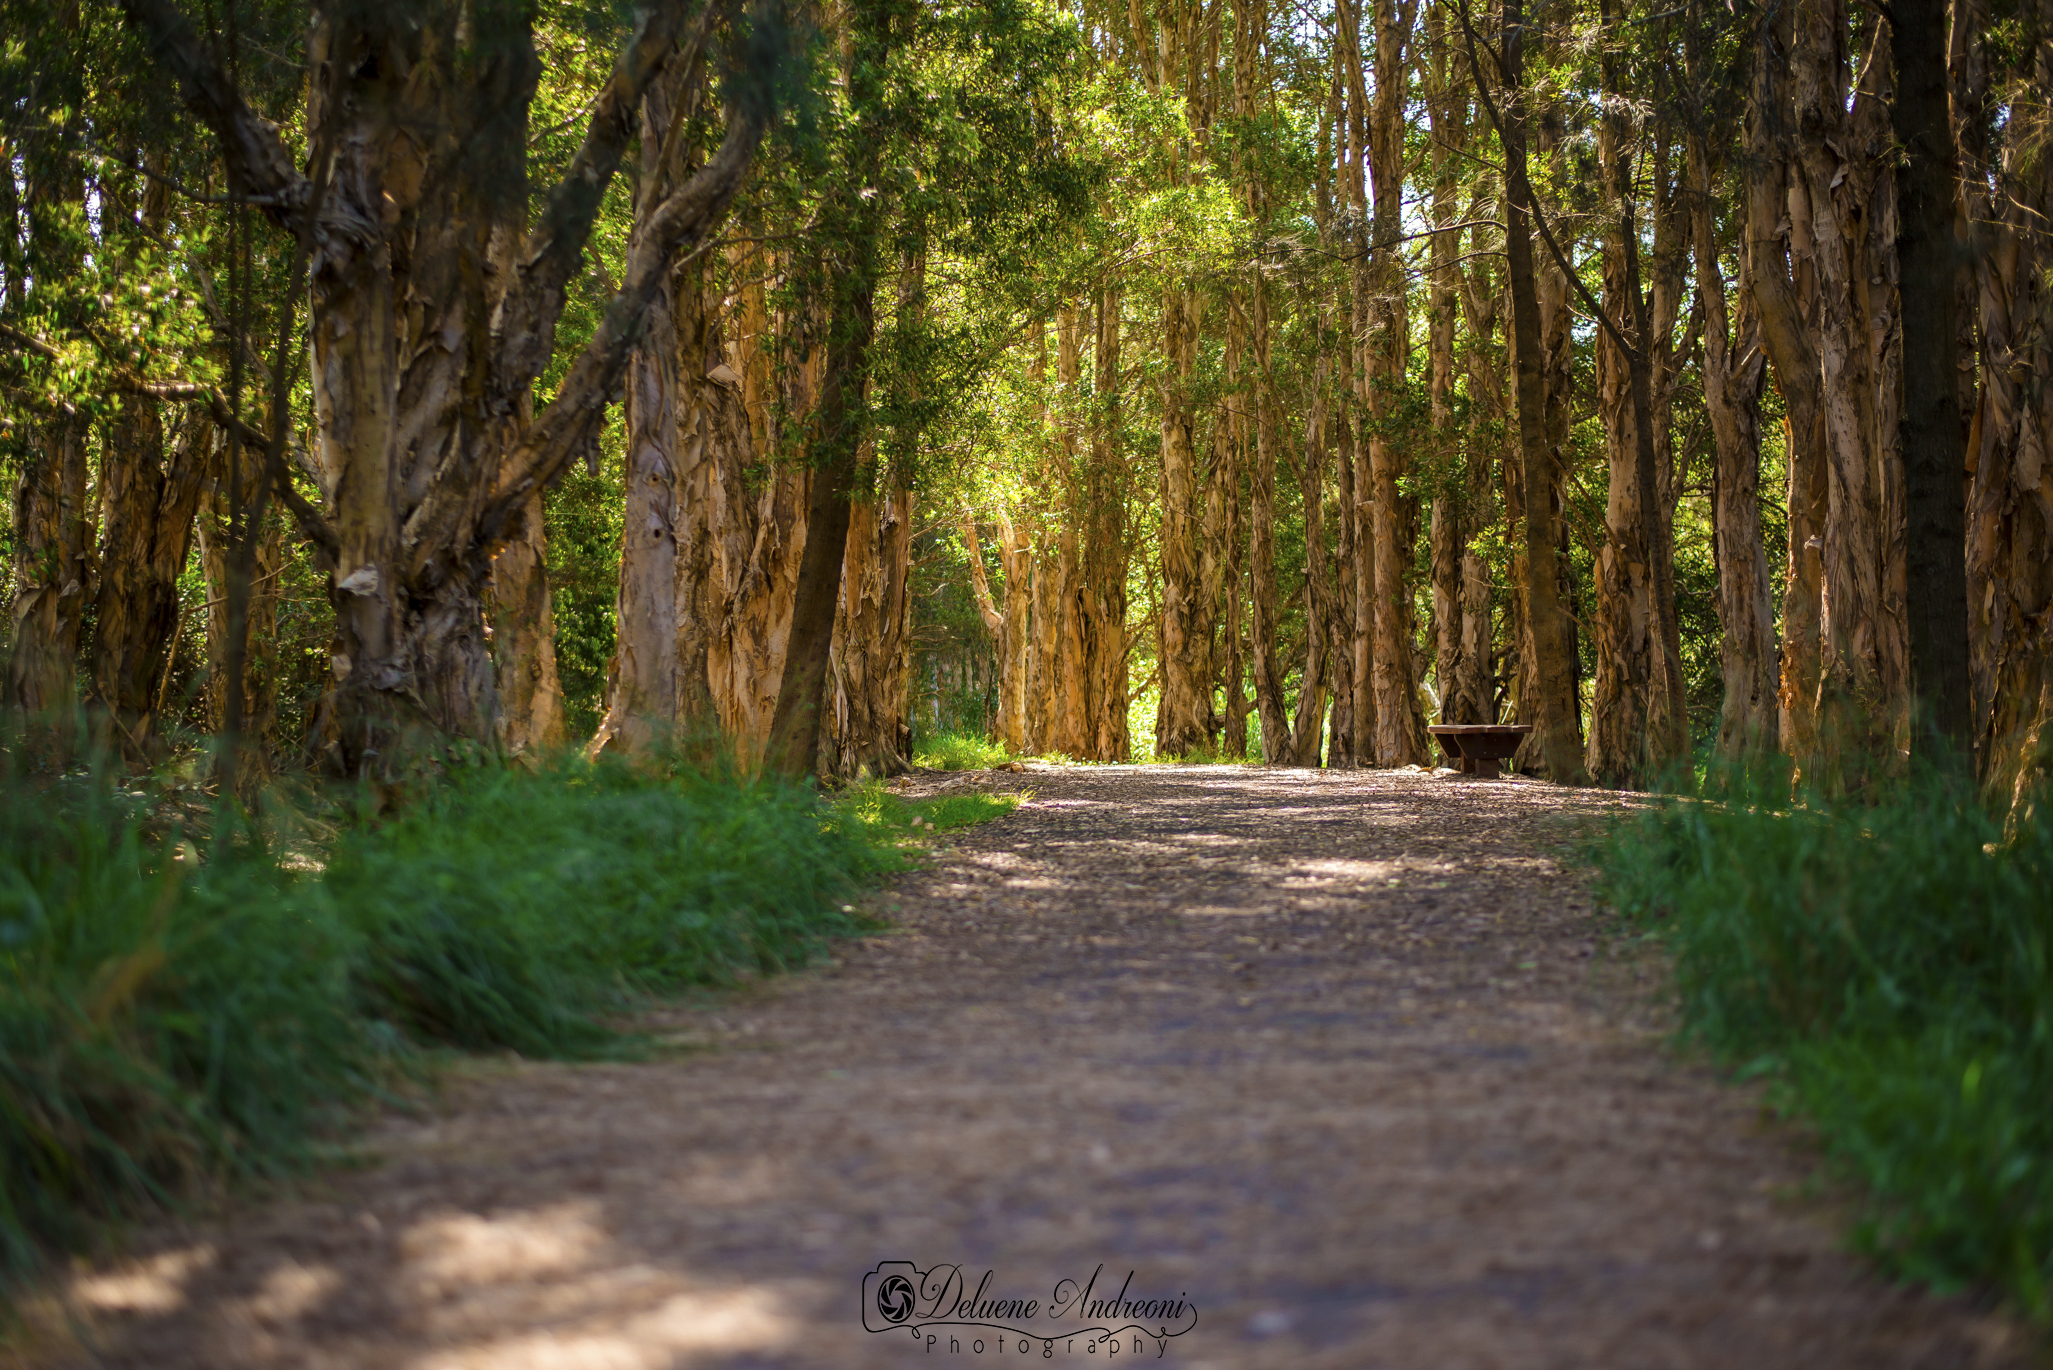 bush track leading through trees 